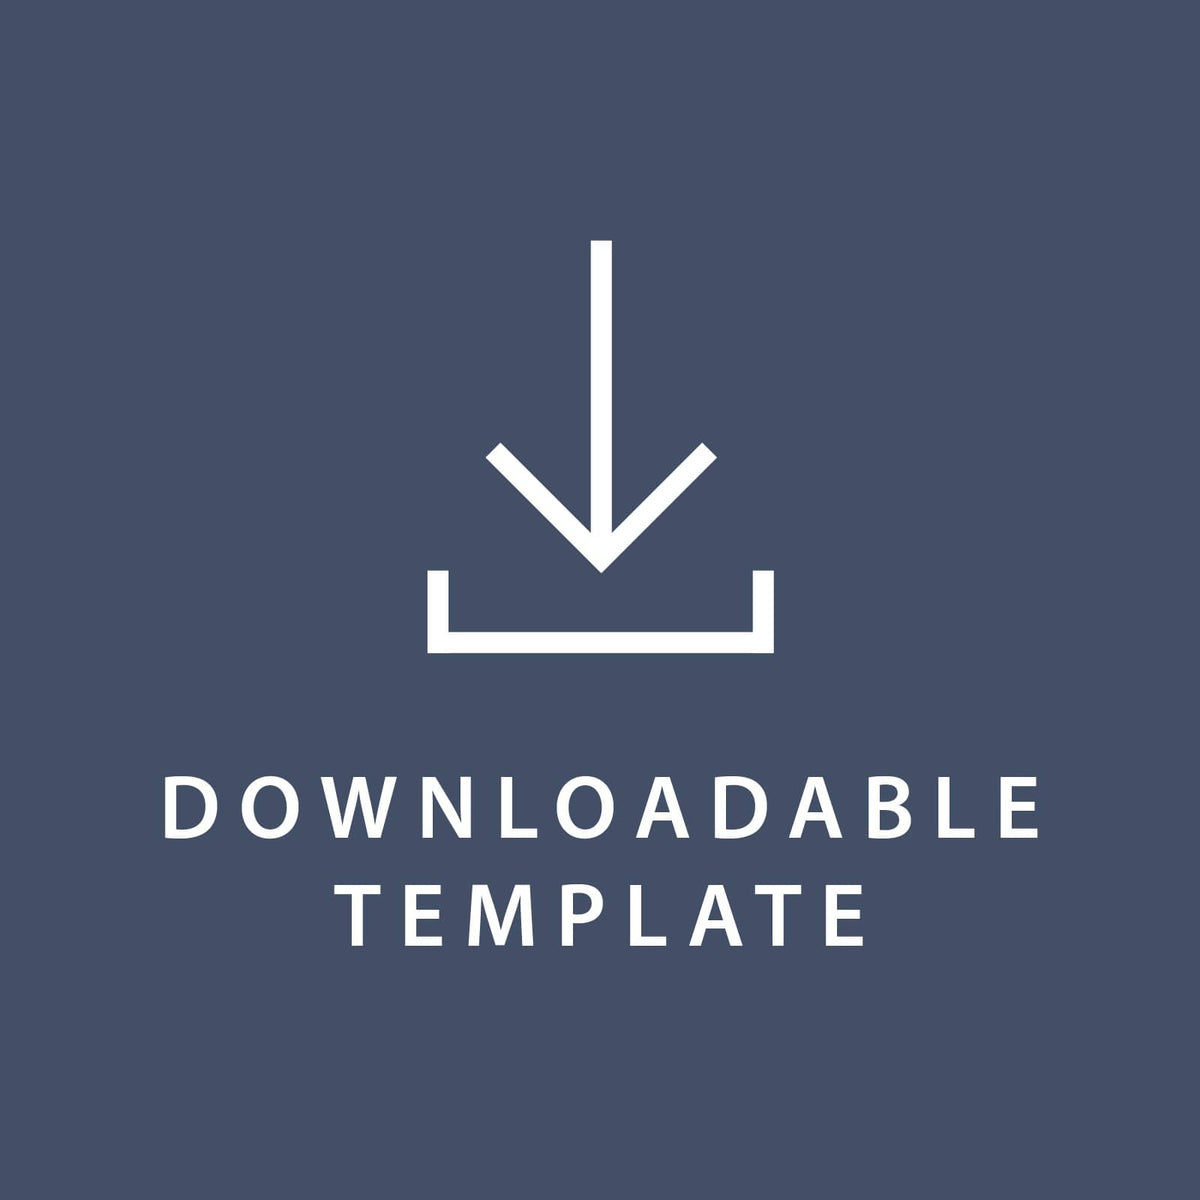 Template for 5 x 8 Certificates Gartner Studios Template tmplt0862